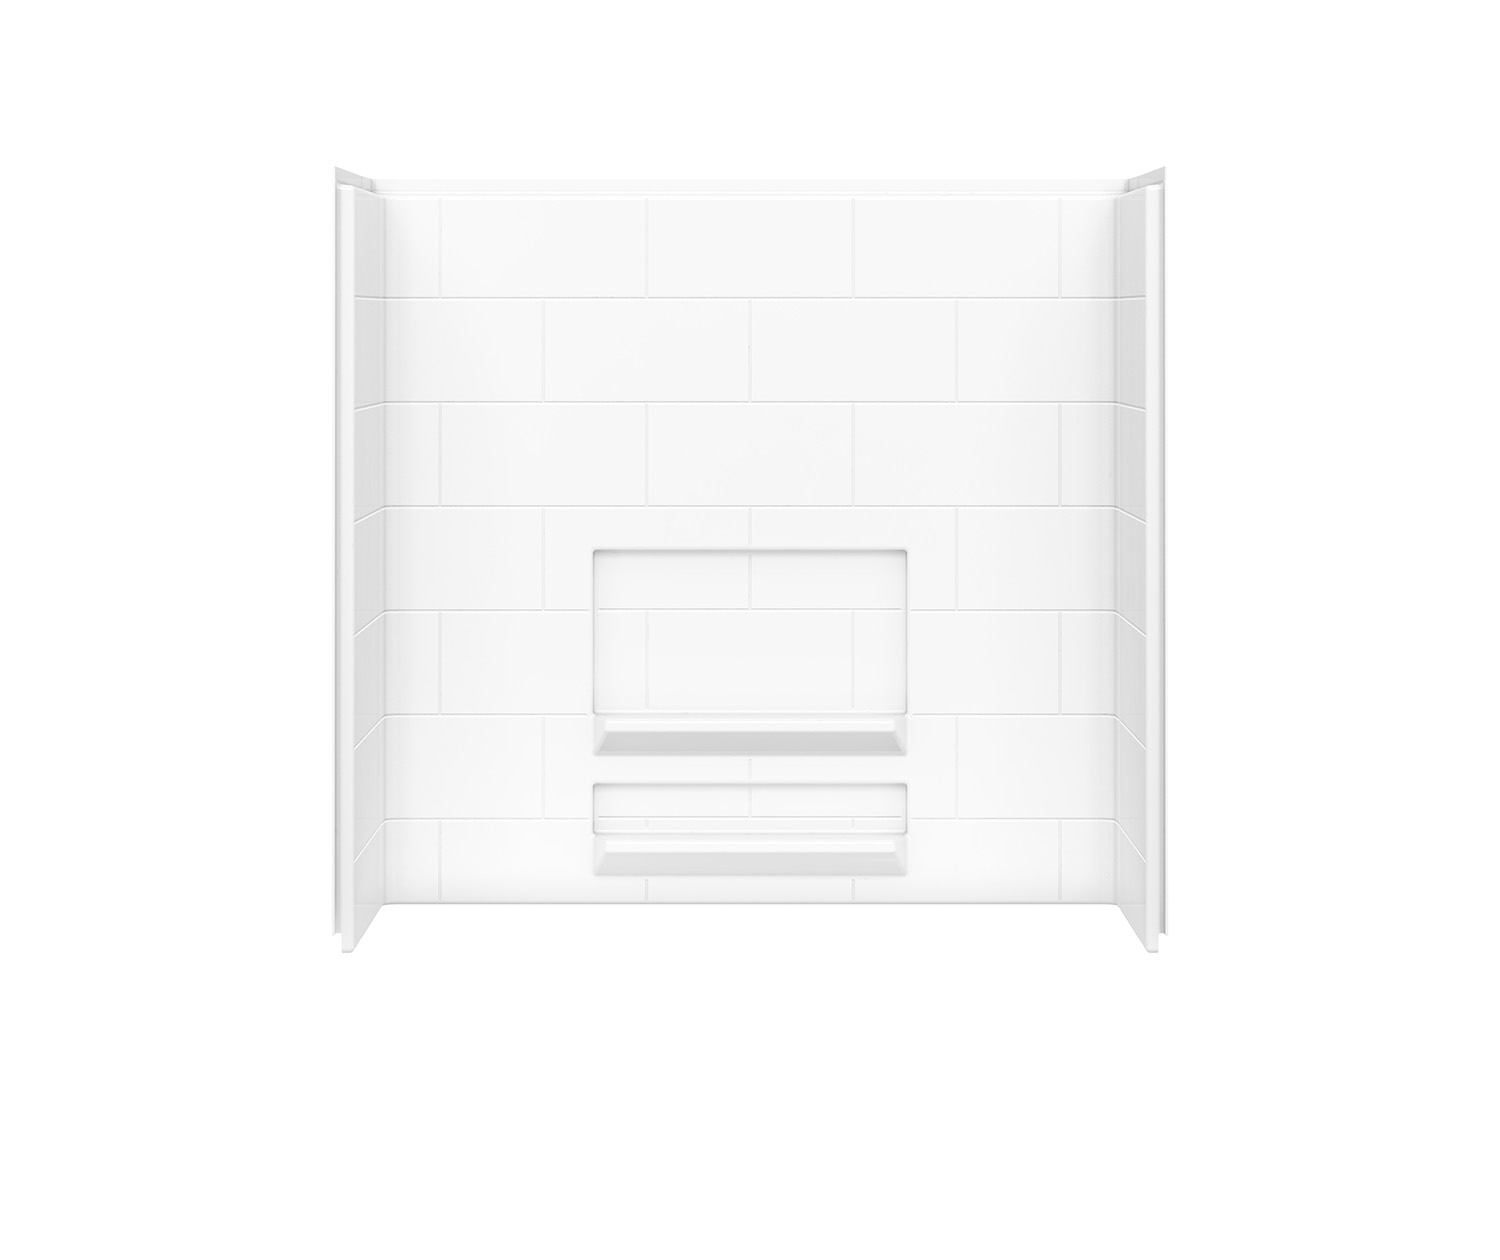 Olio Tile 60 x 30 AcrylX Direct-to-Stud Three-Piece Wall Kit in 